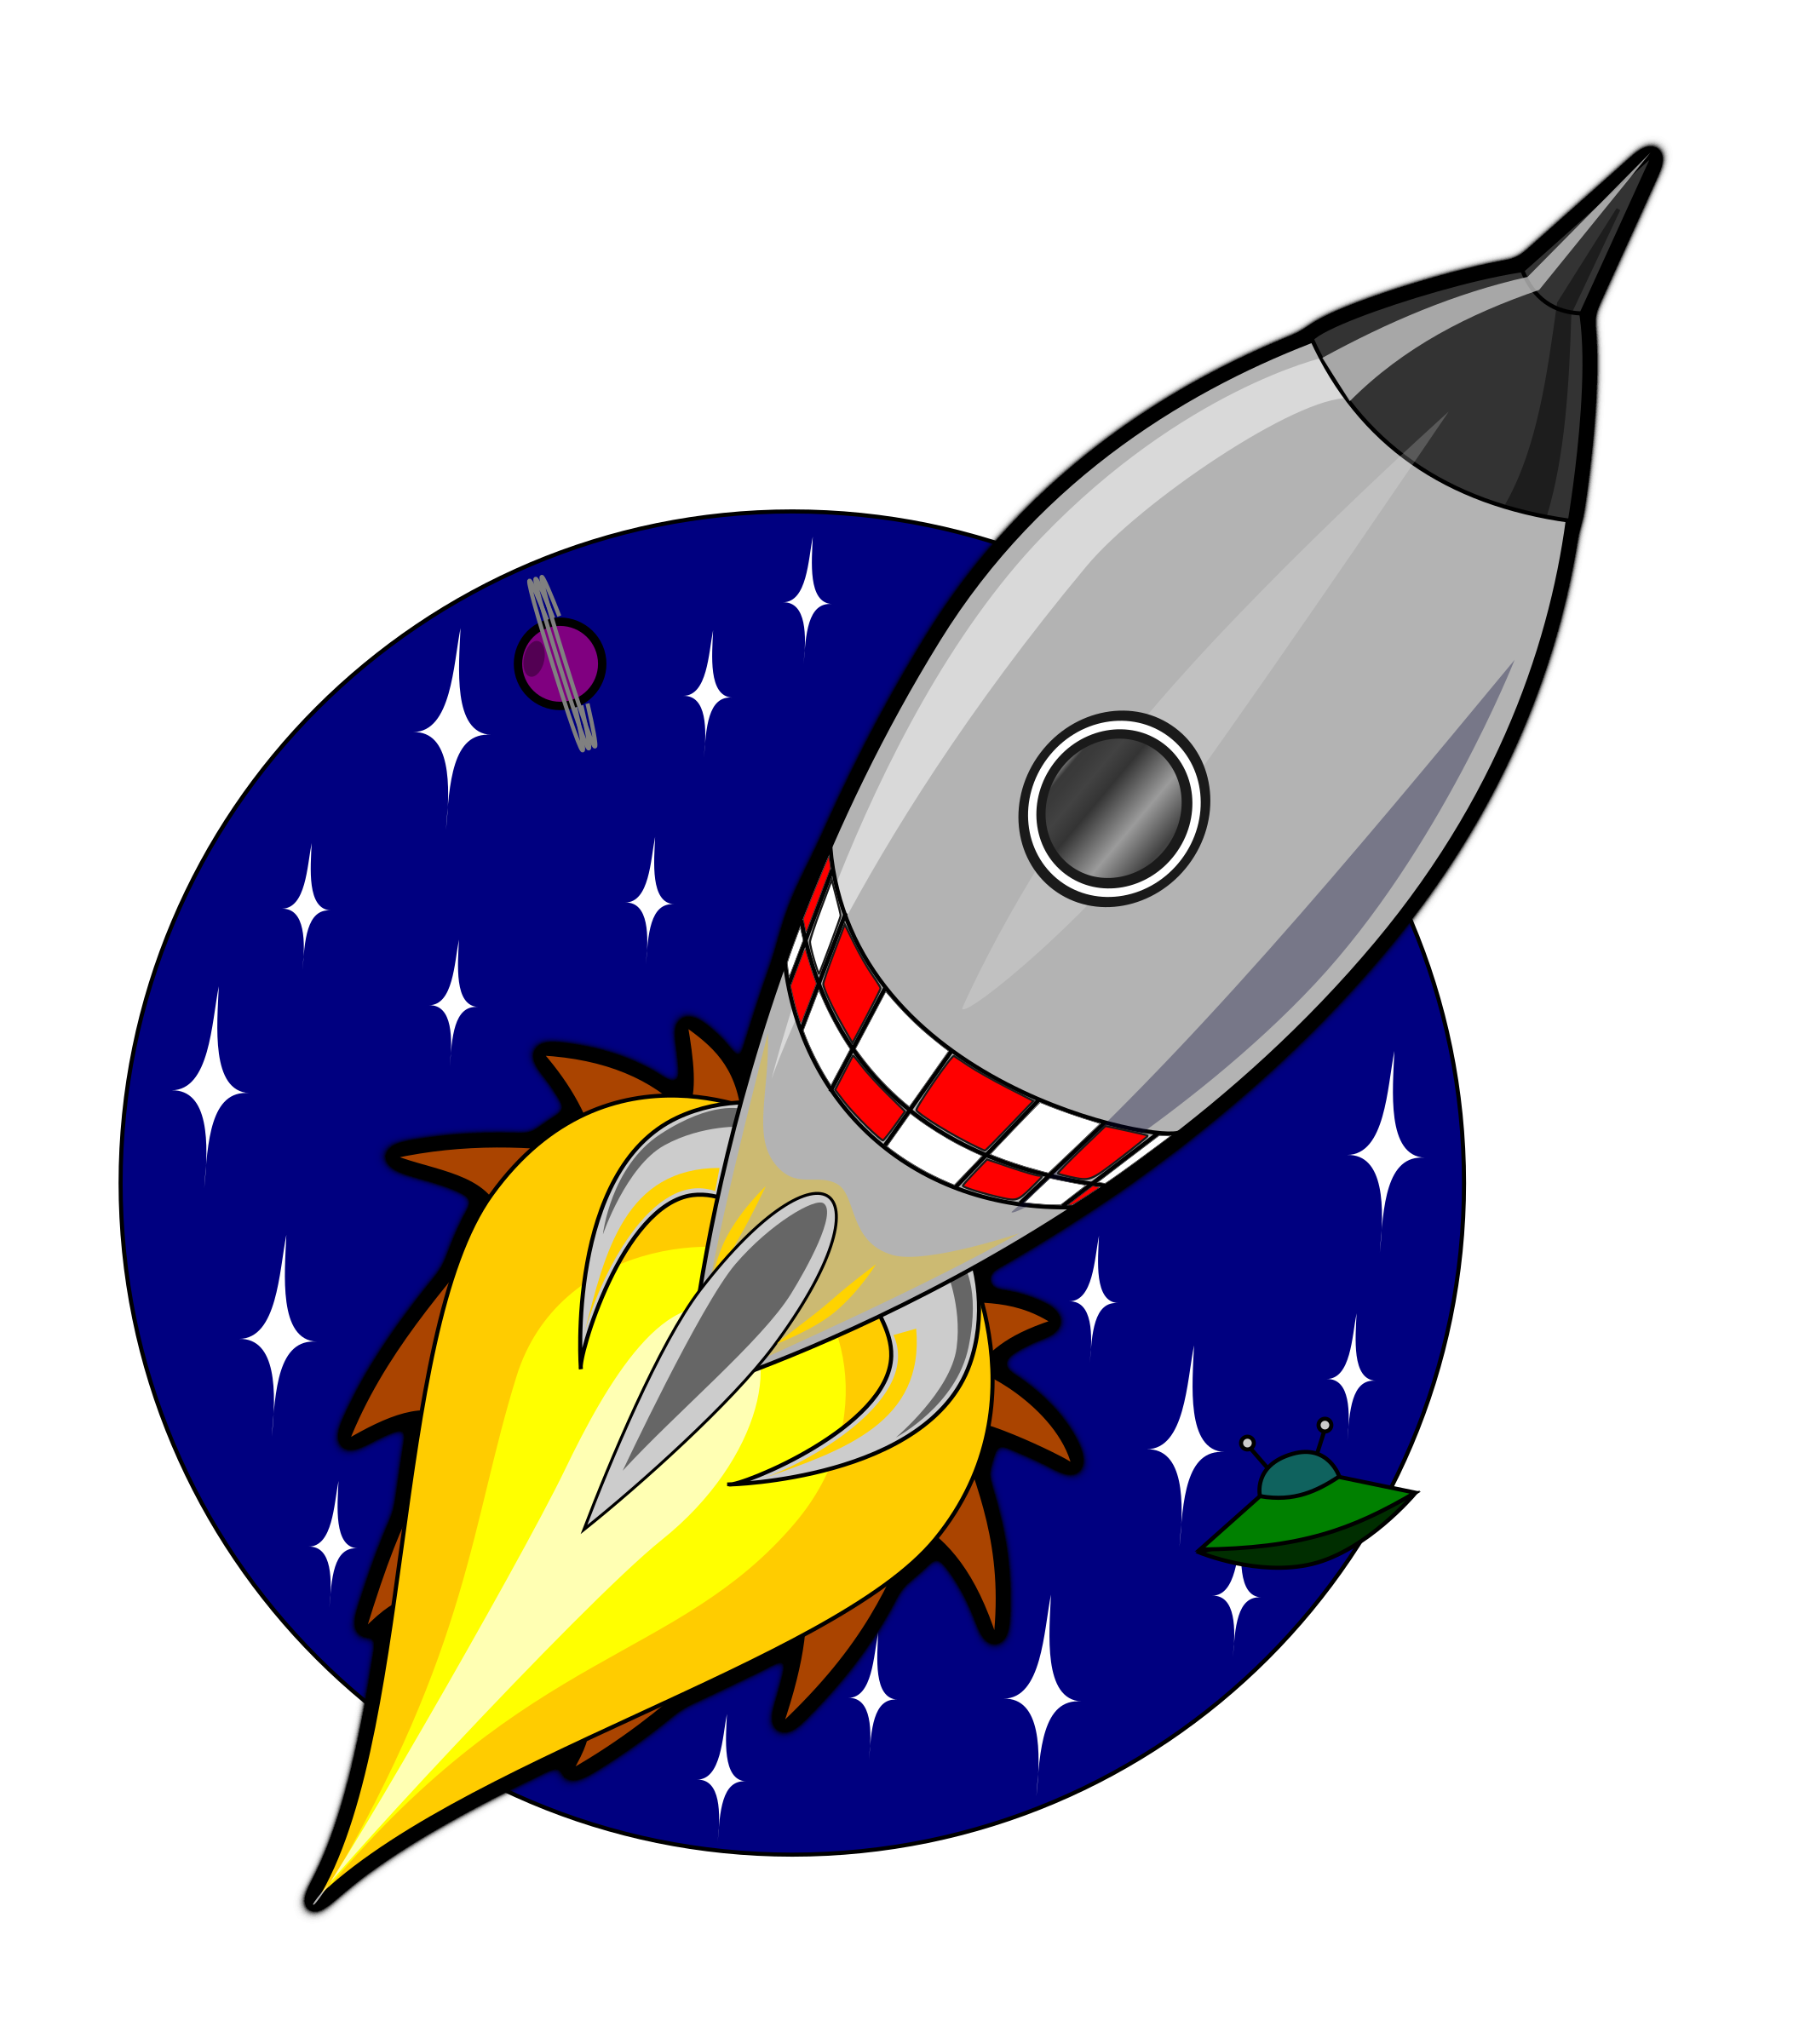 Space Rocket PNG Background Image